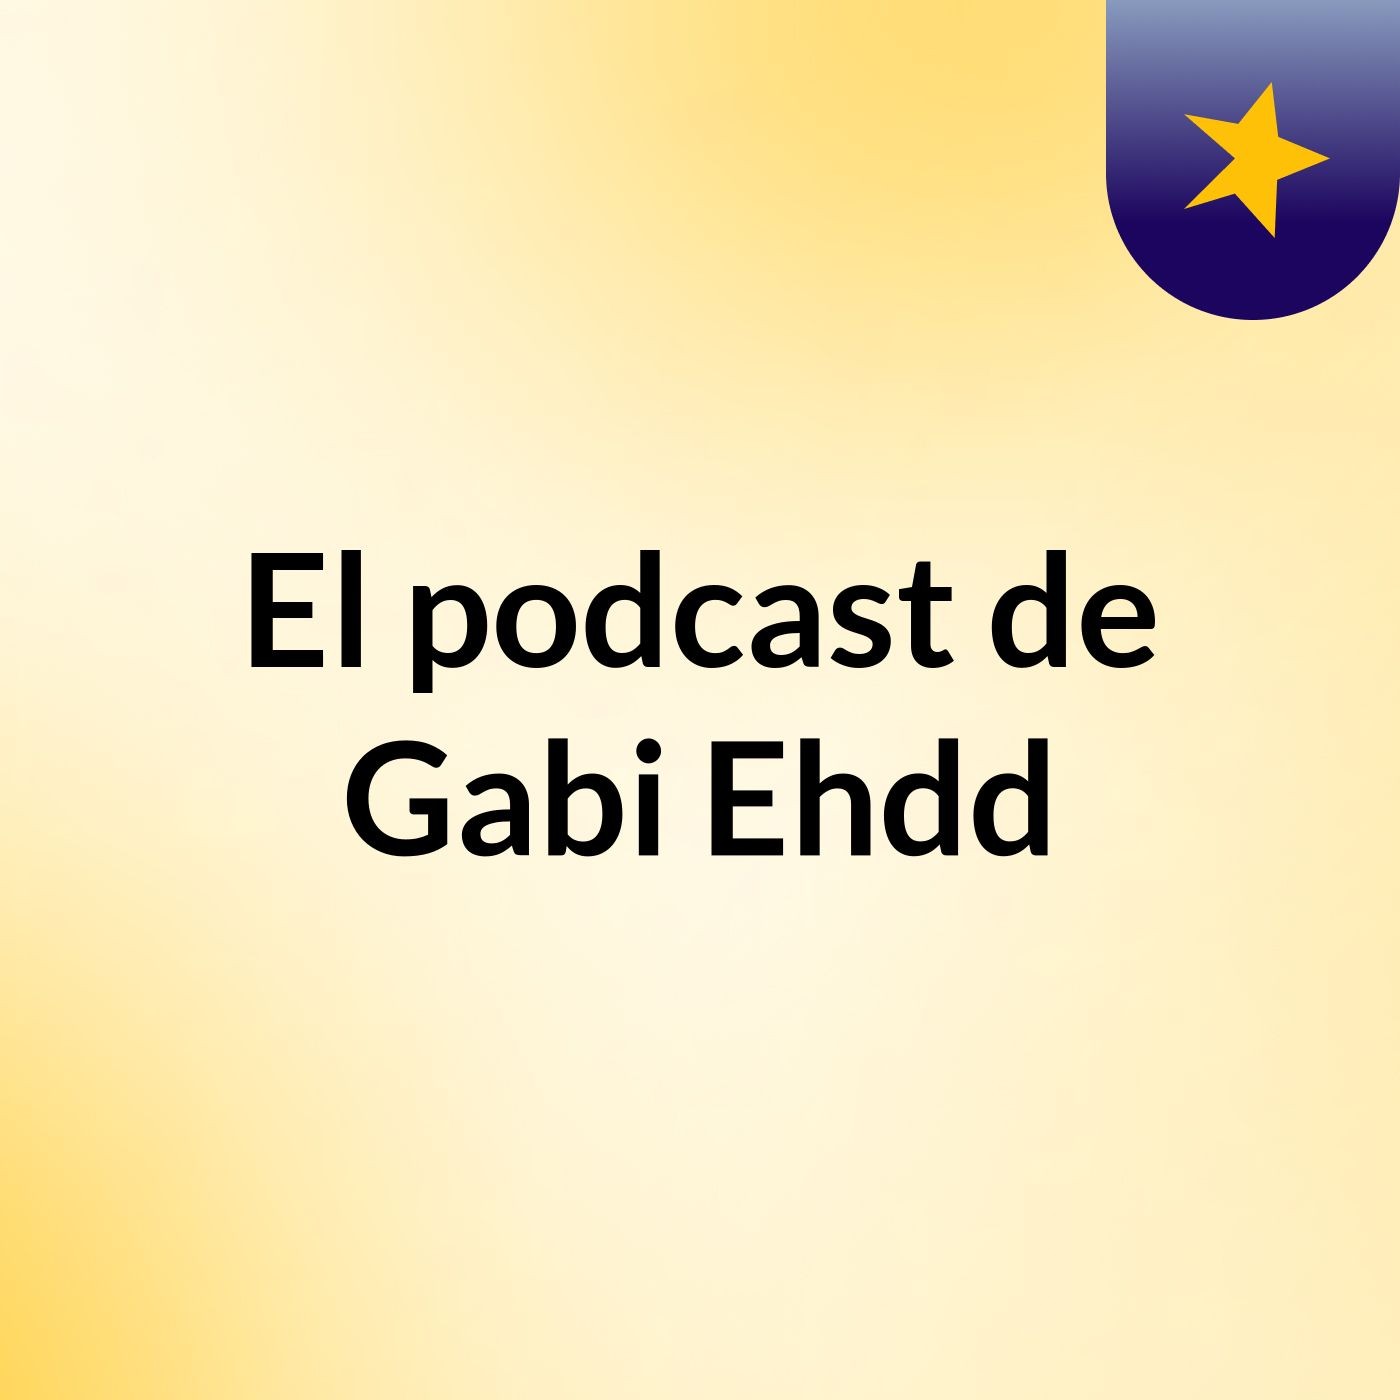 LucumiEpisodio 7 - El podcast de Gabi Ehdd